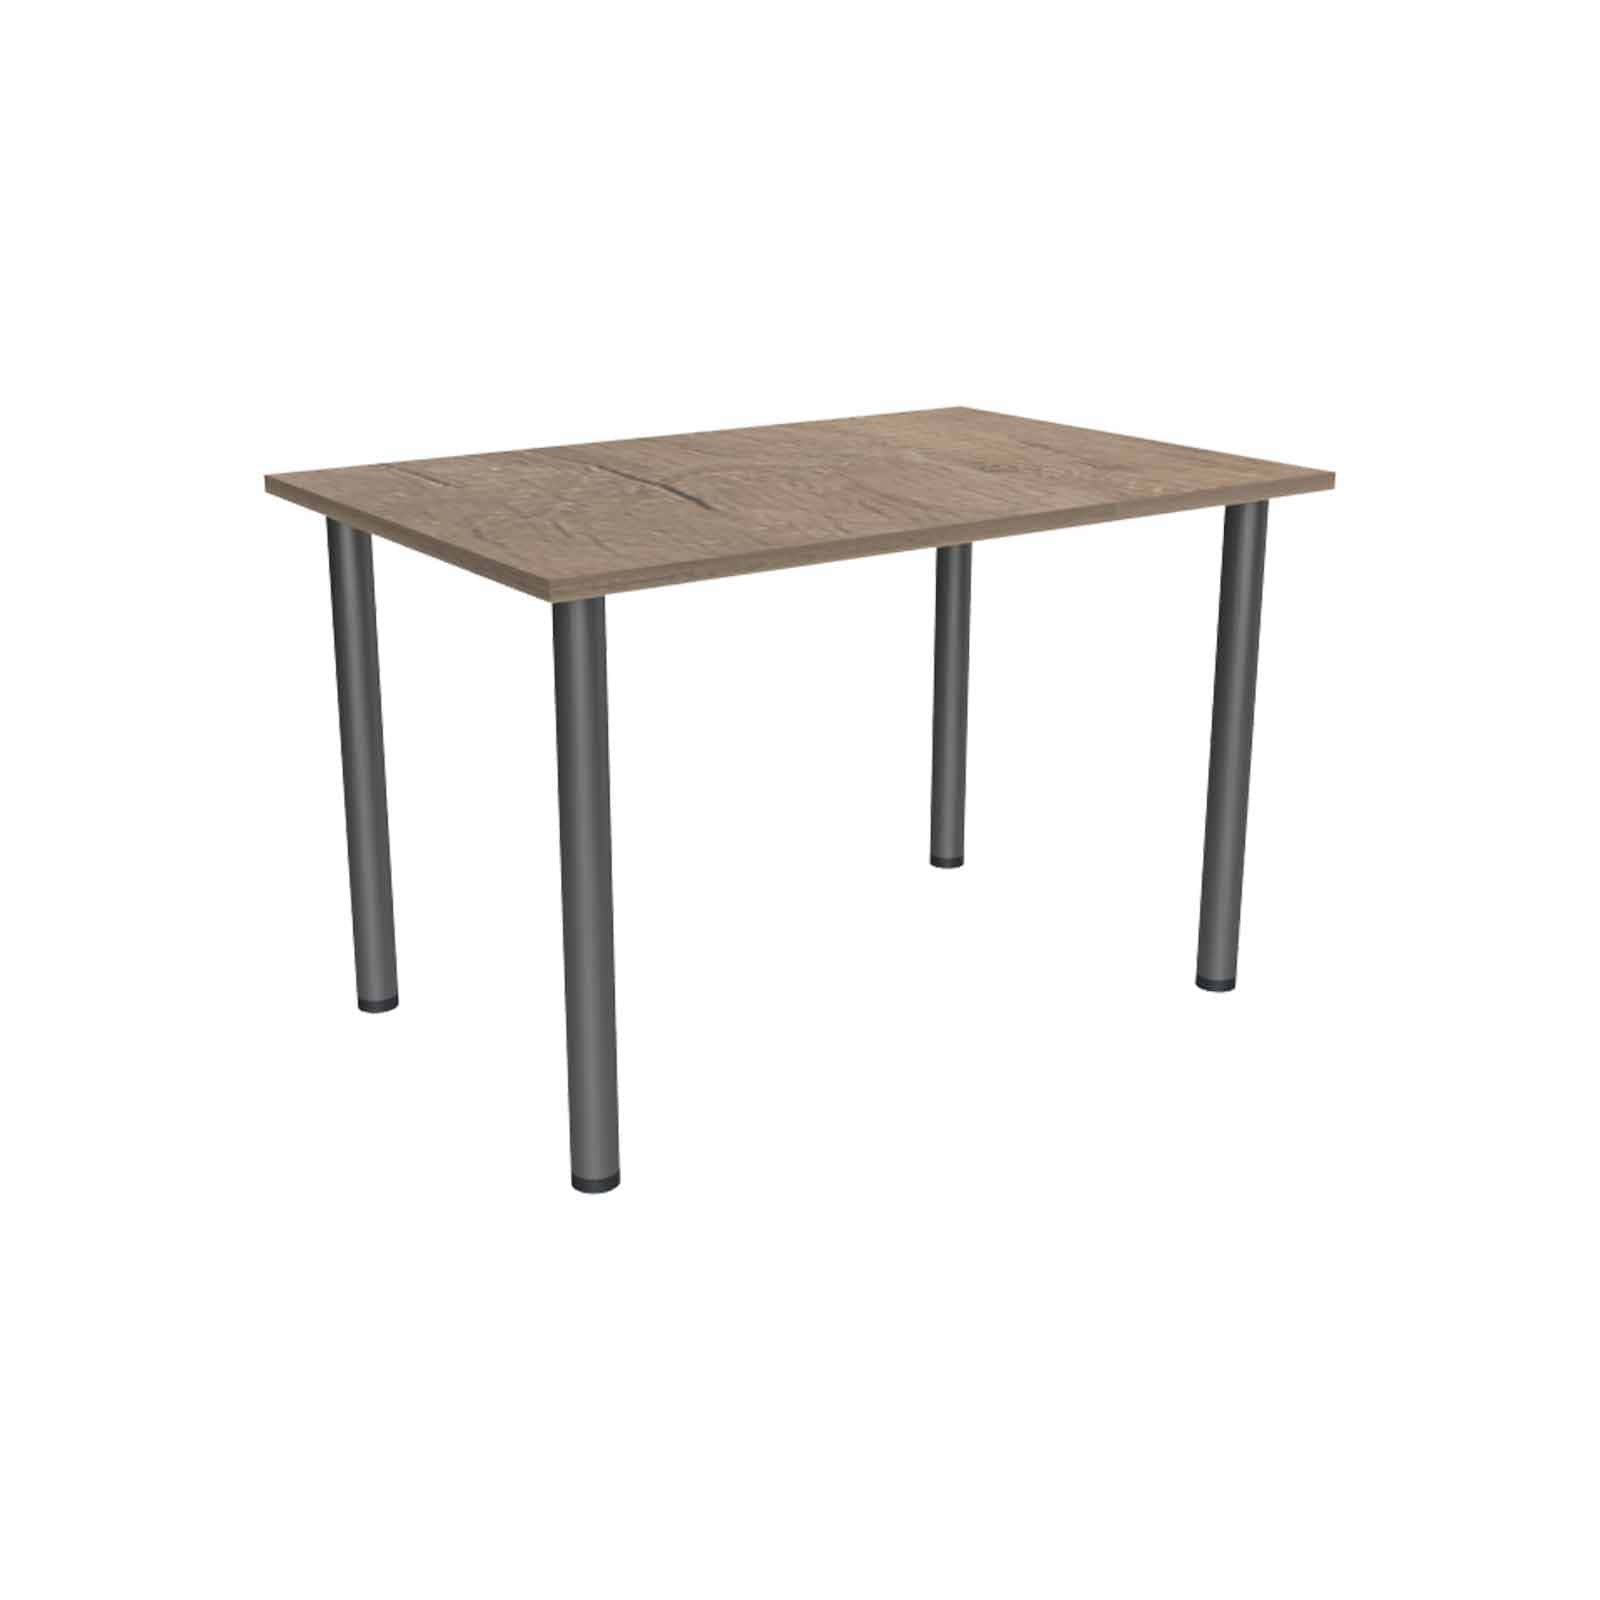 Office Tables - Silver Tubular Legs W1200 x D800 x H740mm